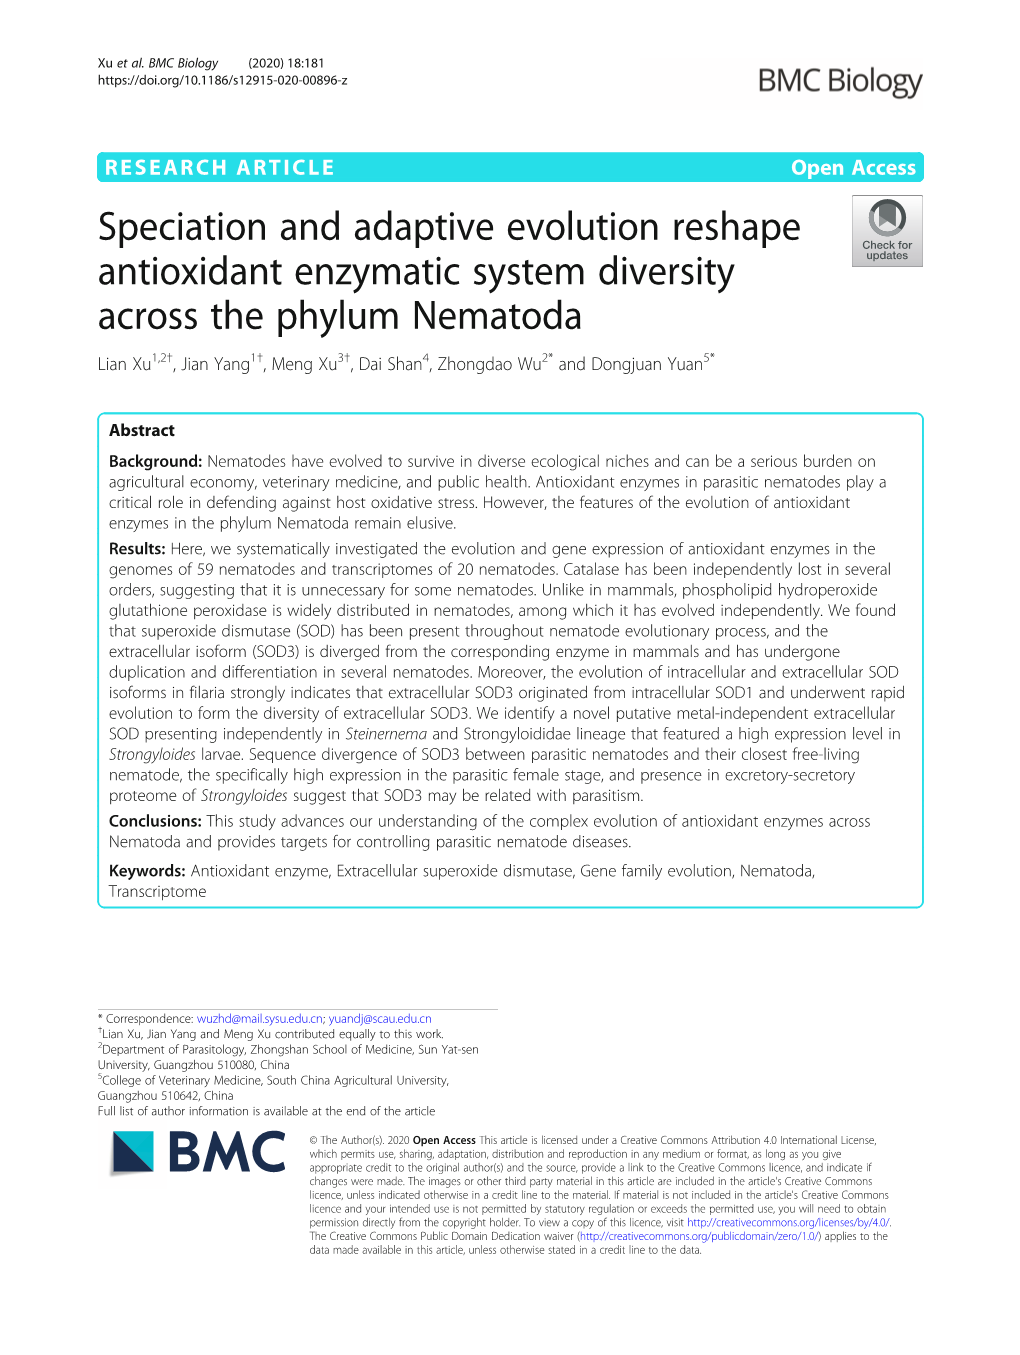 Speciation and Adaptive Evolution Reshape Antioxidant Enzymatic